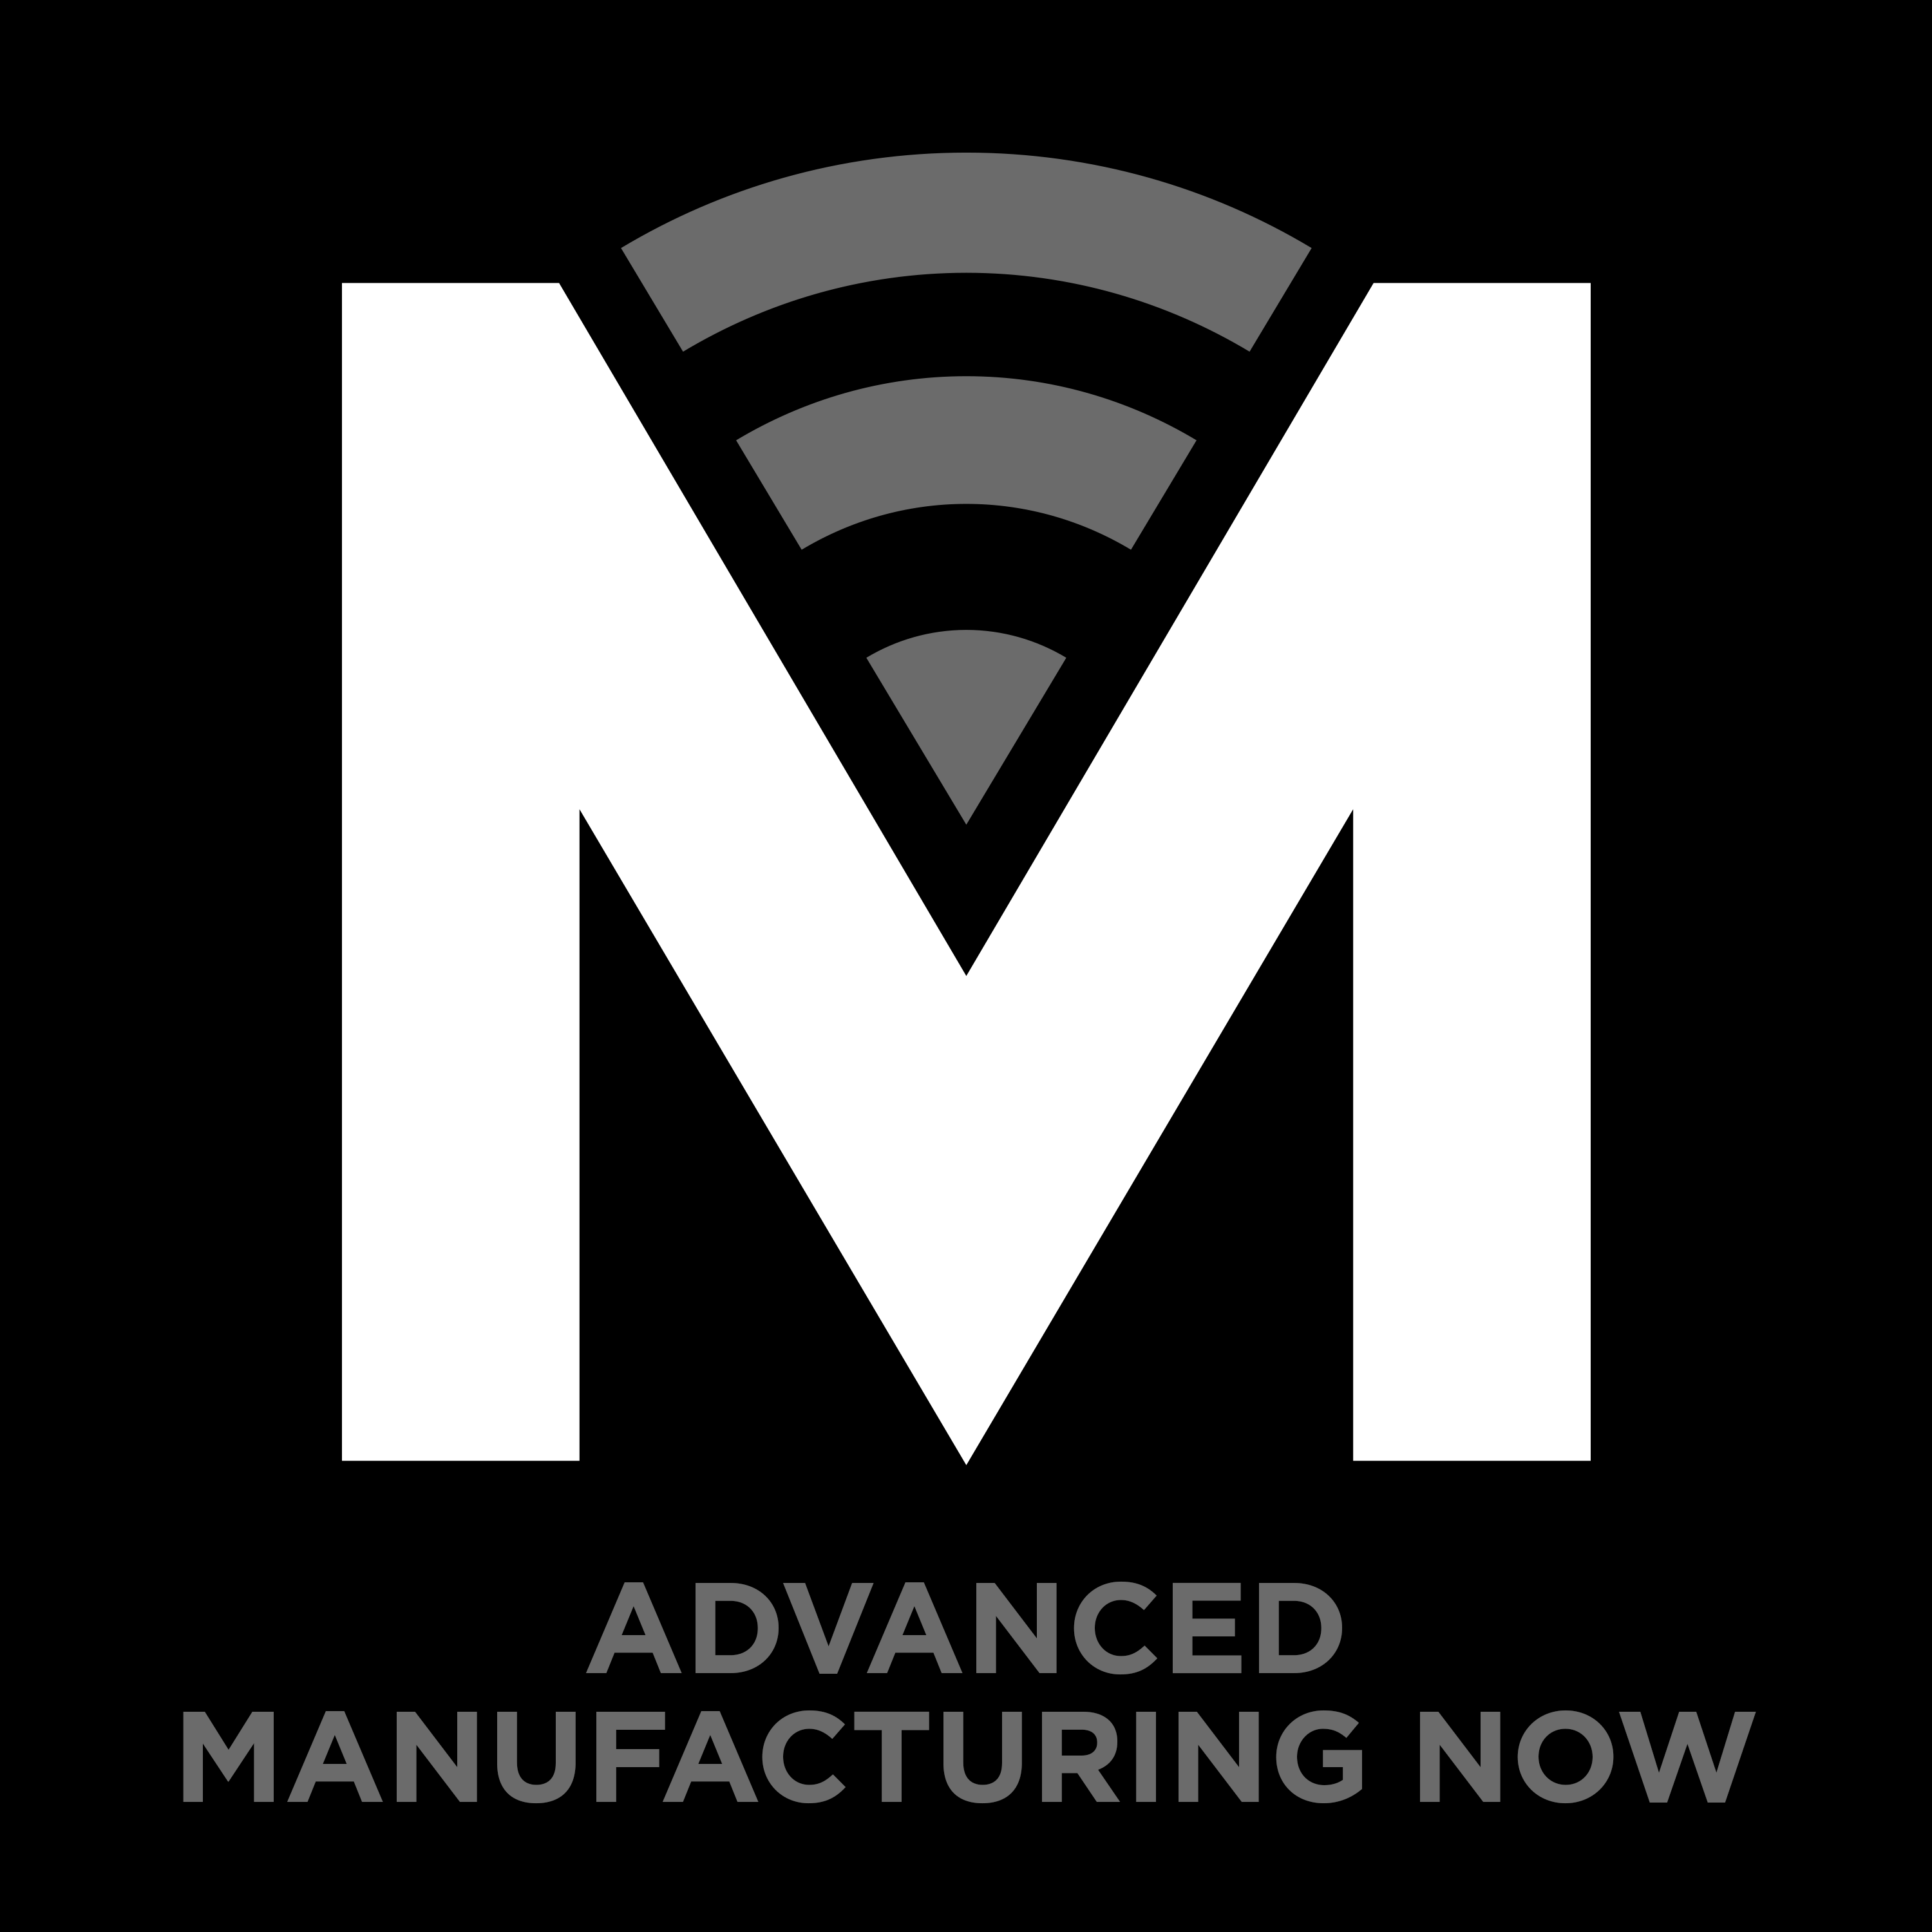 advanced manufacturing logo gray